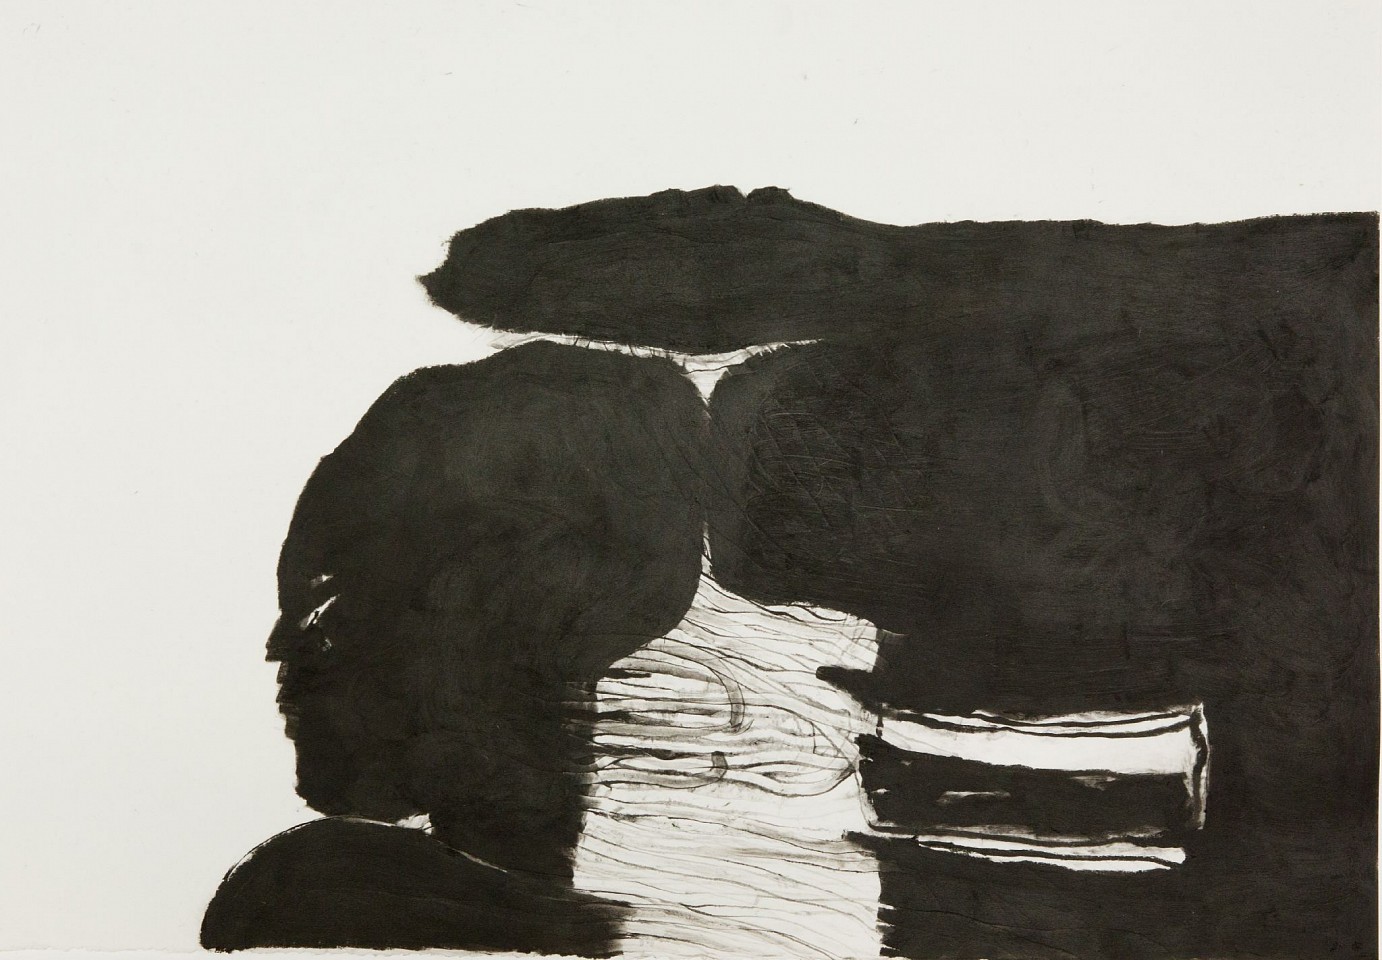 UDO NÖGER, Alles 19, 2019
charcoal on paper, 33 x 47 in. (83.8 x 119.4 cm)
NU-C-0199